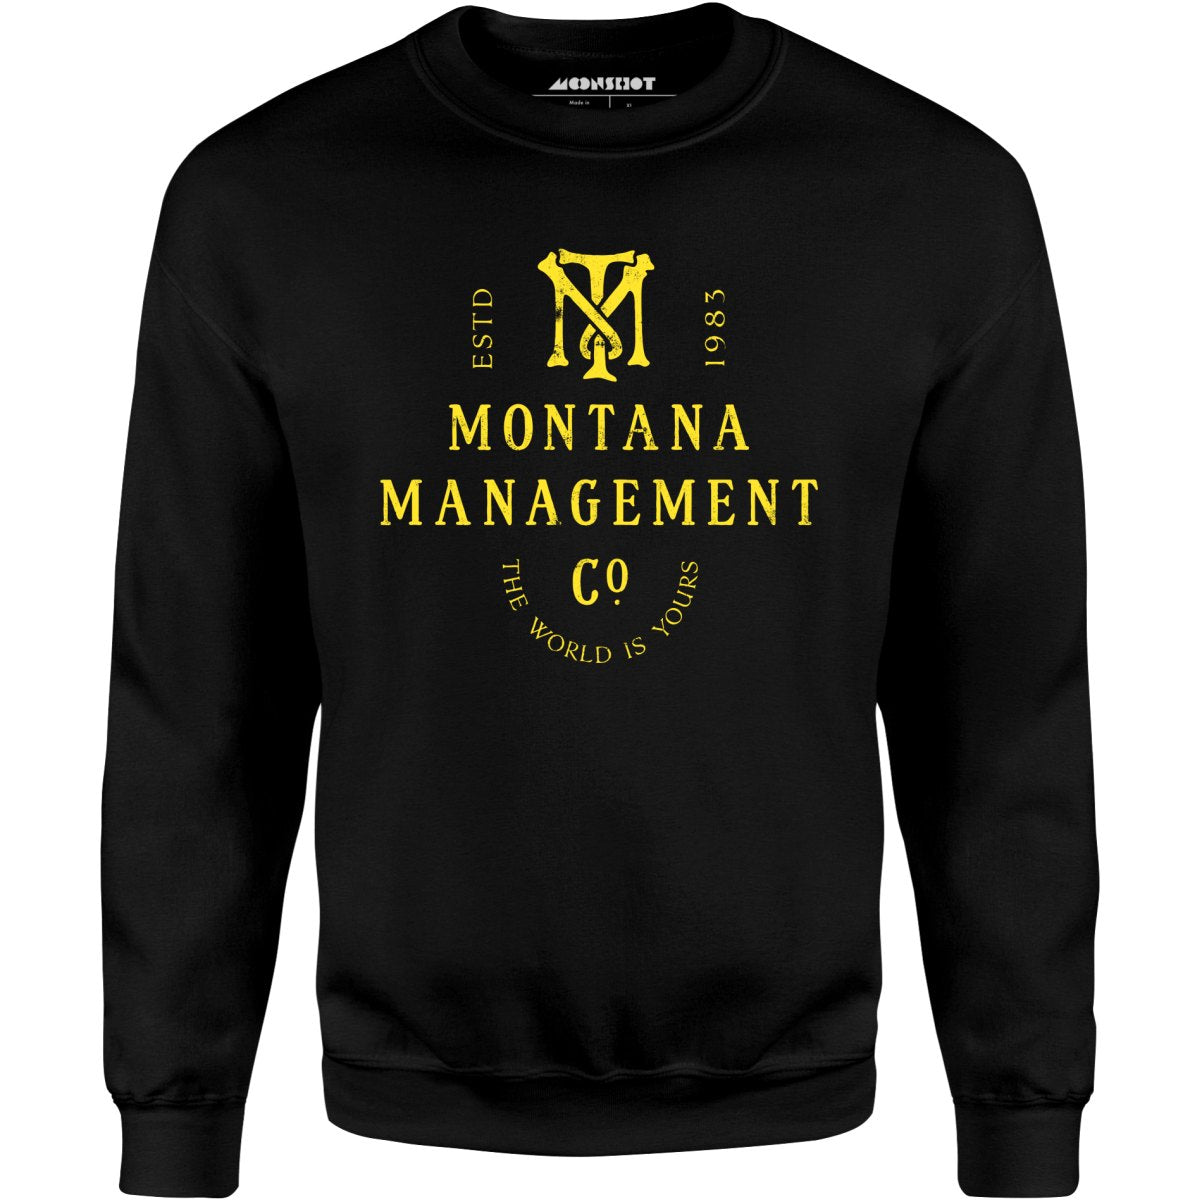 Montana Management Co. - Unisex Sweatshirt